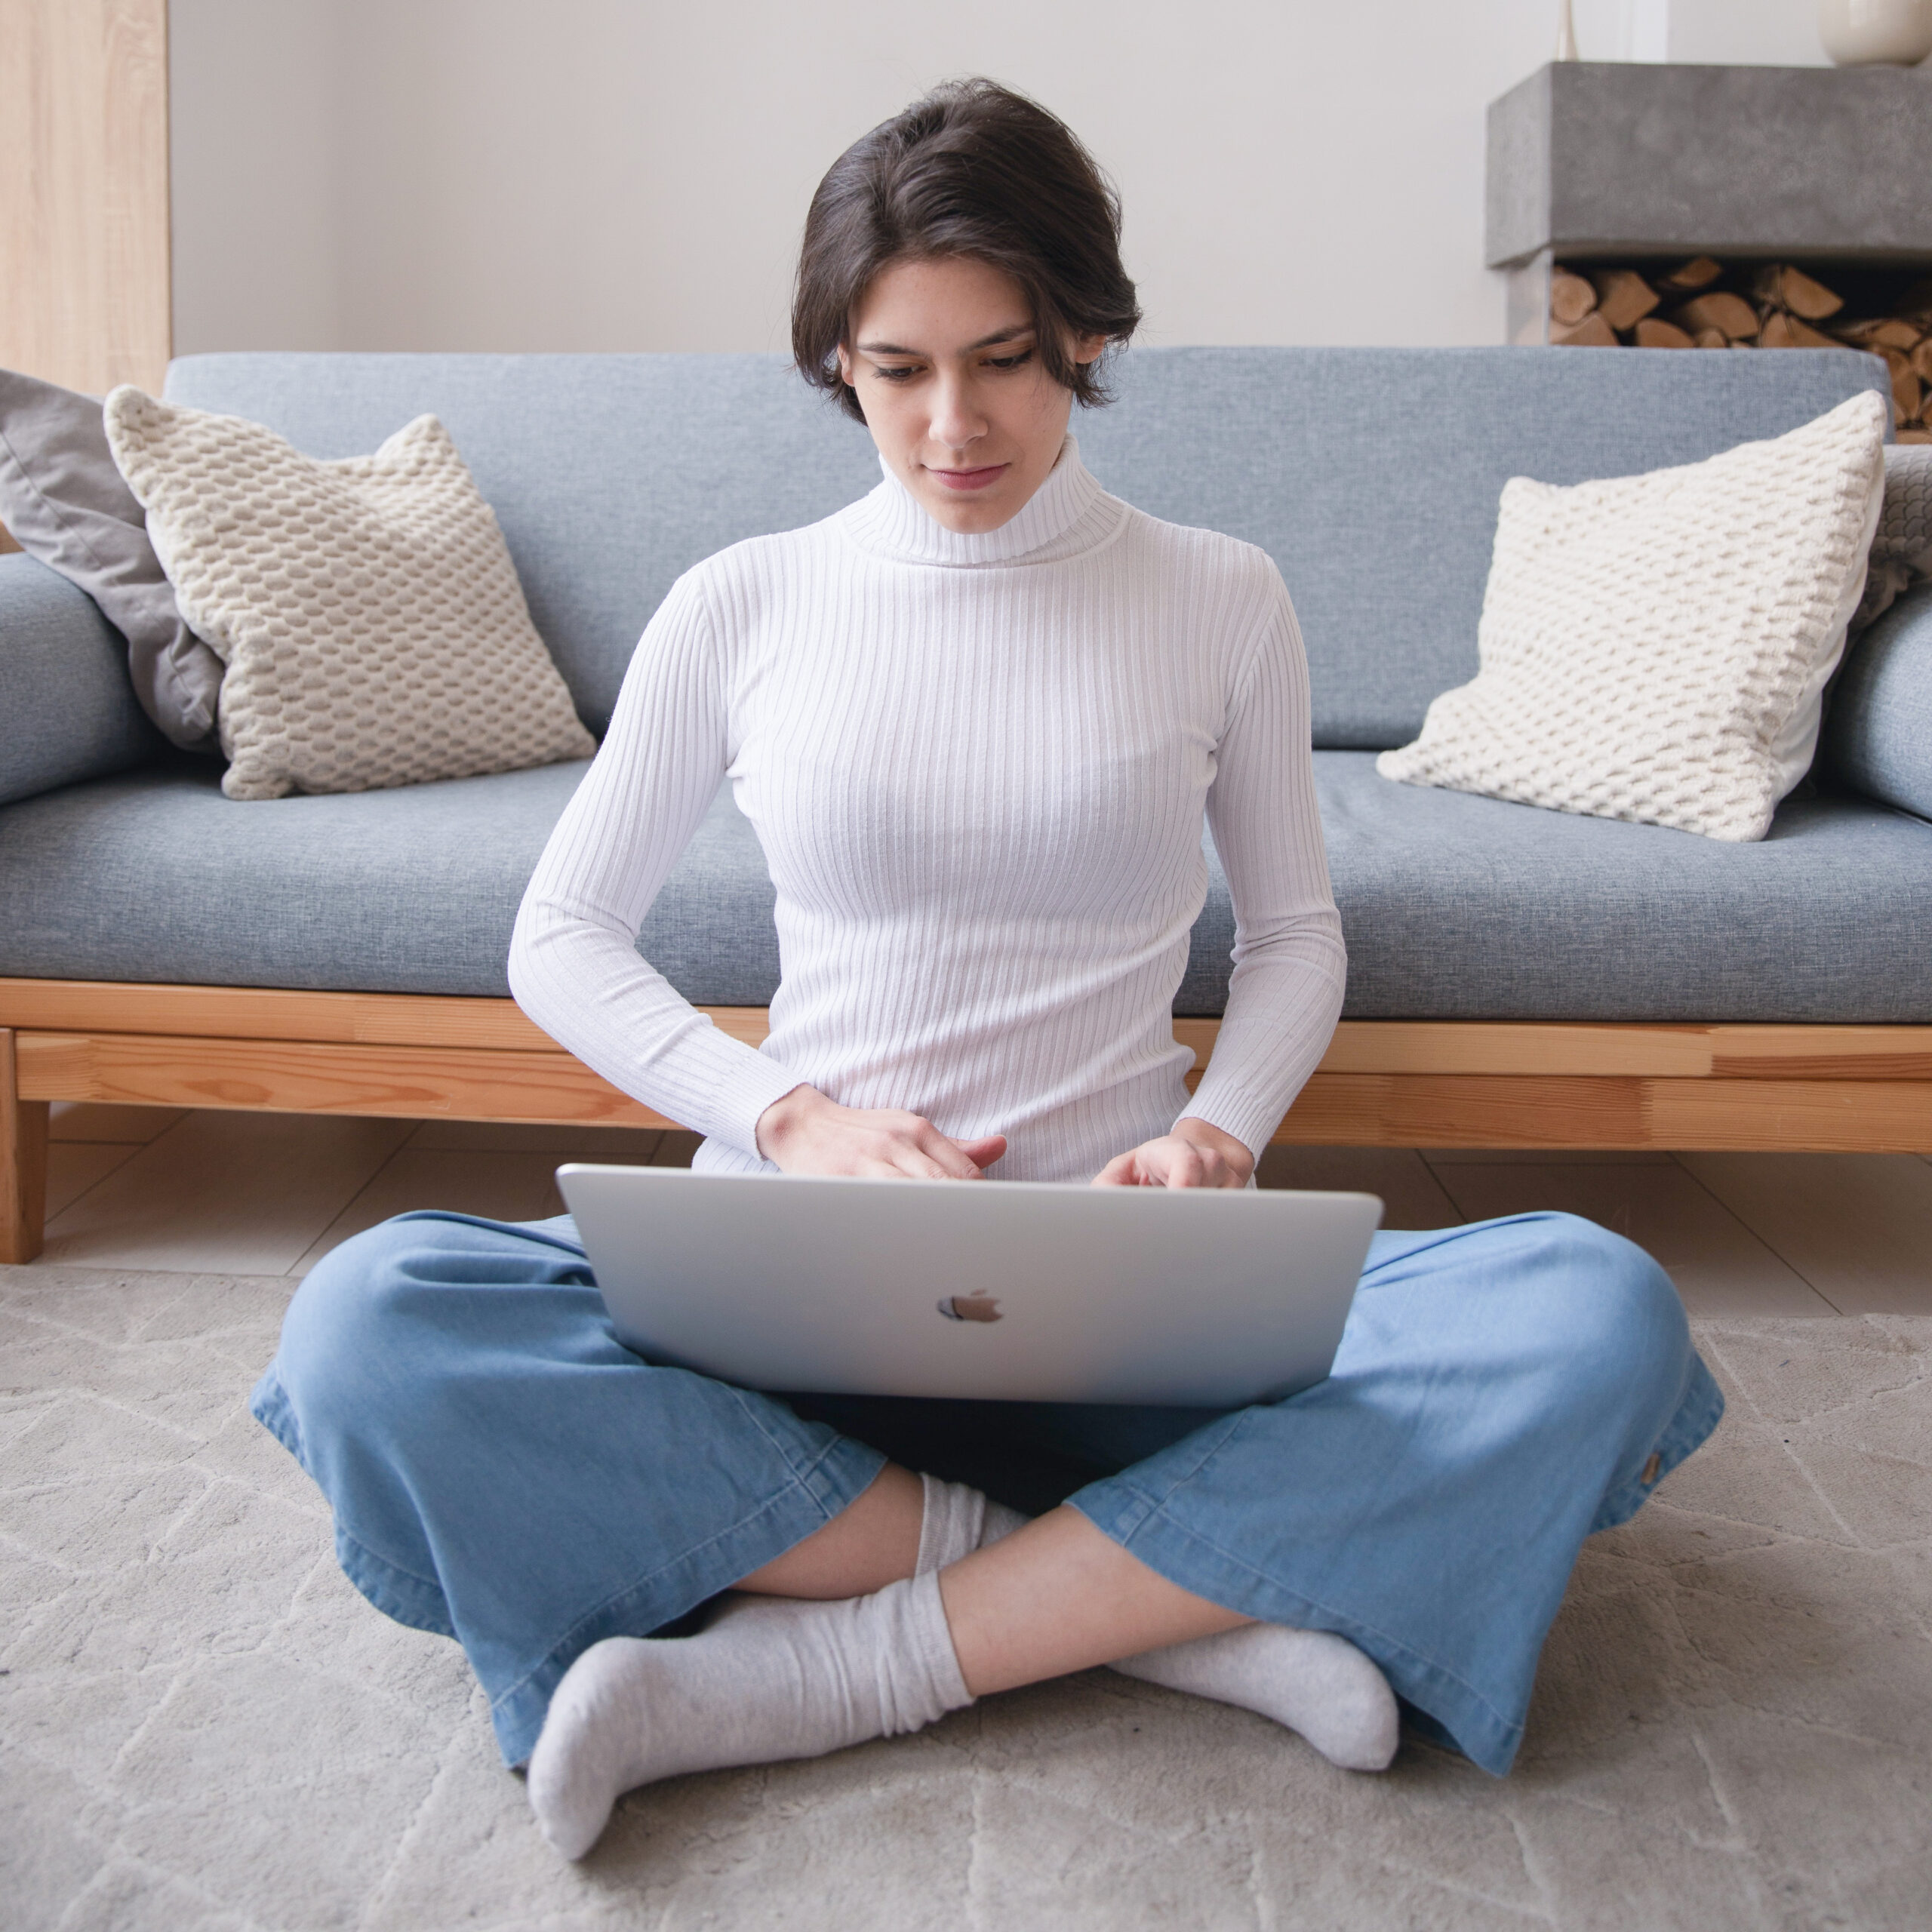 Woman sitting cross-legged on floor reading on laptop